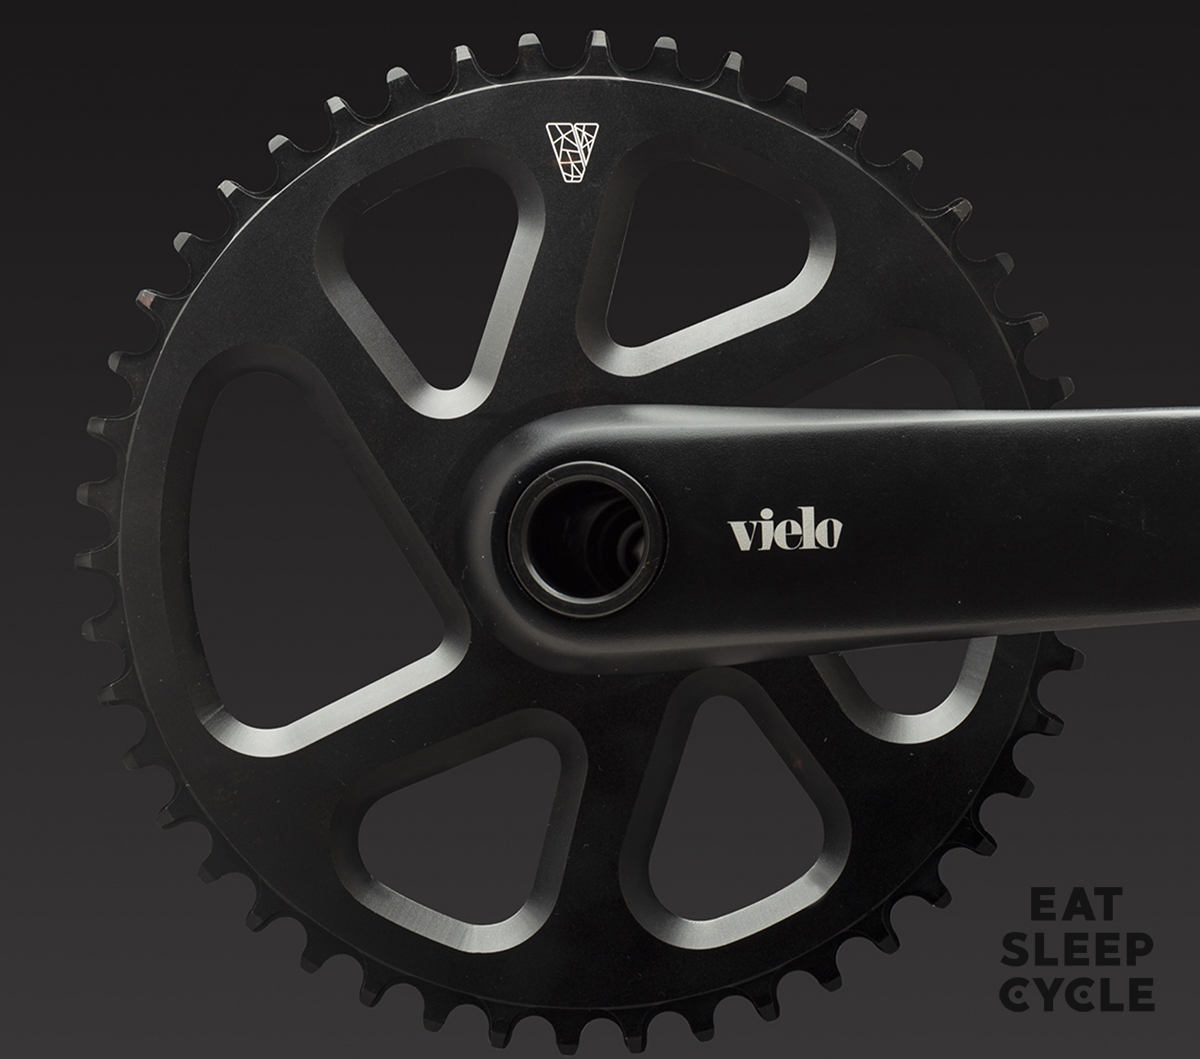 Eat-Sleep-Cycle-Cycling-Girona-Bike-Vielo-1x-cadena